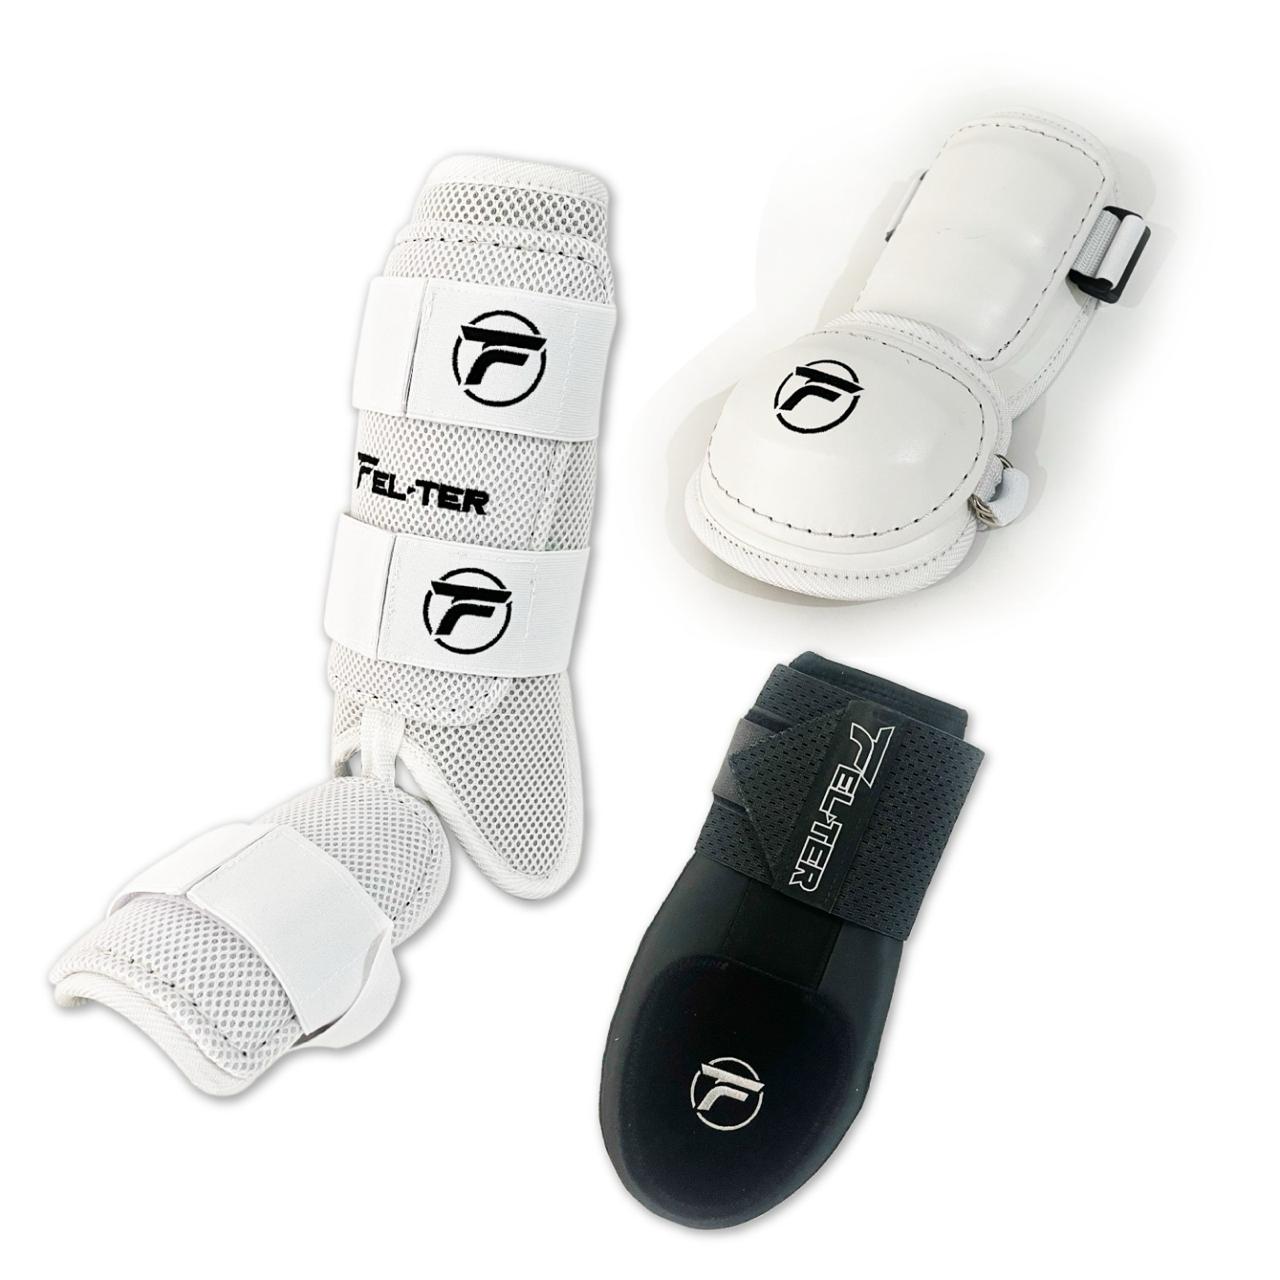 Kit 3 Piezas Protecciones De Bateo Velcro + Slidding Glove Adulto